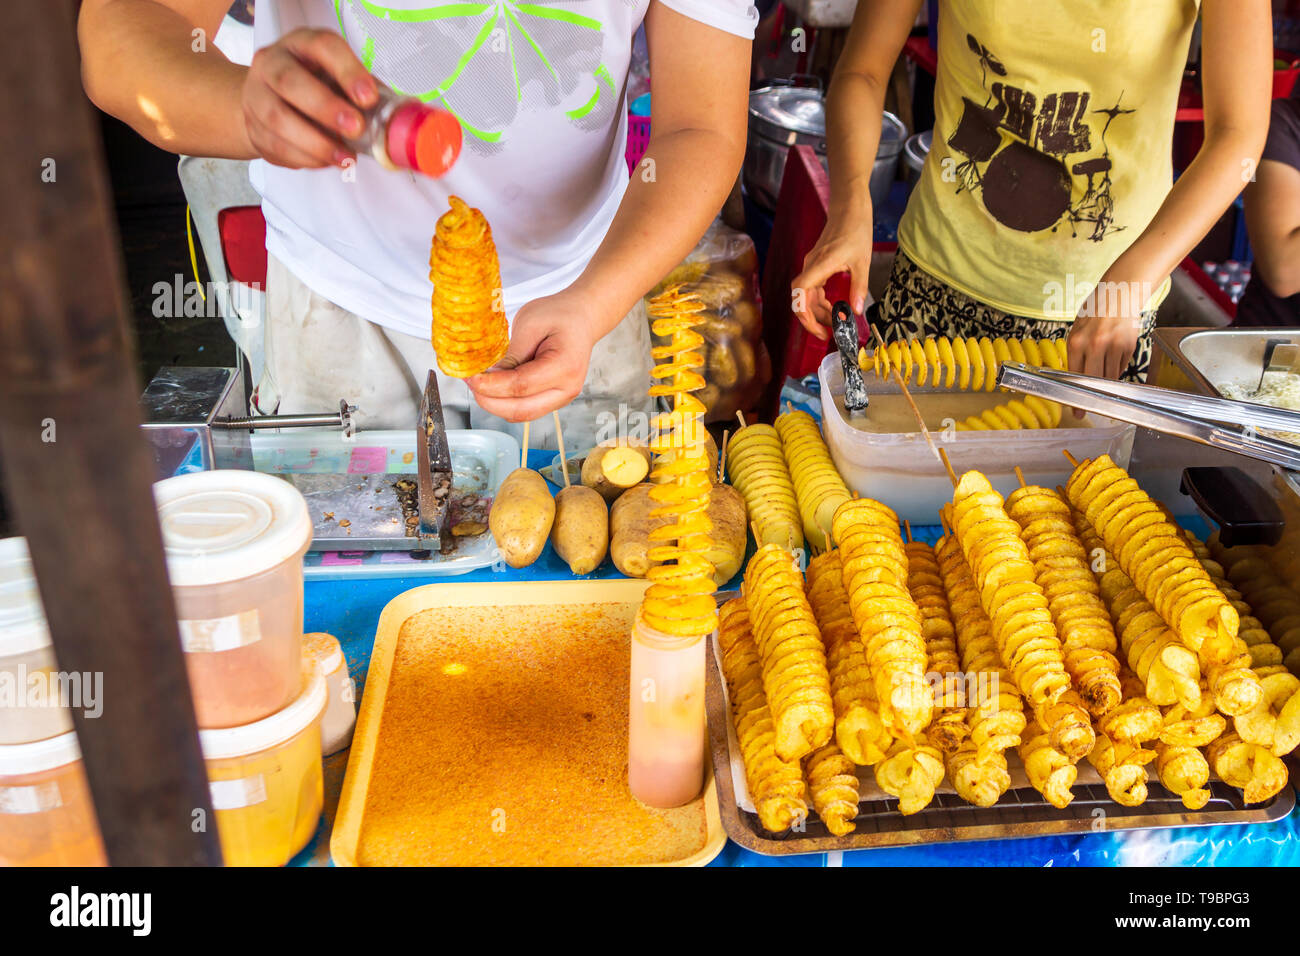 https://c8.alamy.com/comp/T9BPG3/preparation-of-spiral-potato-chips-on-bangkok-open-market-handmade-street-food-from-fresh-potatoes-thailand-T9BPG3.jpg